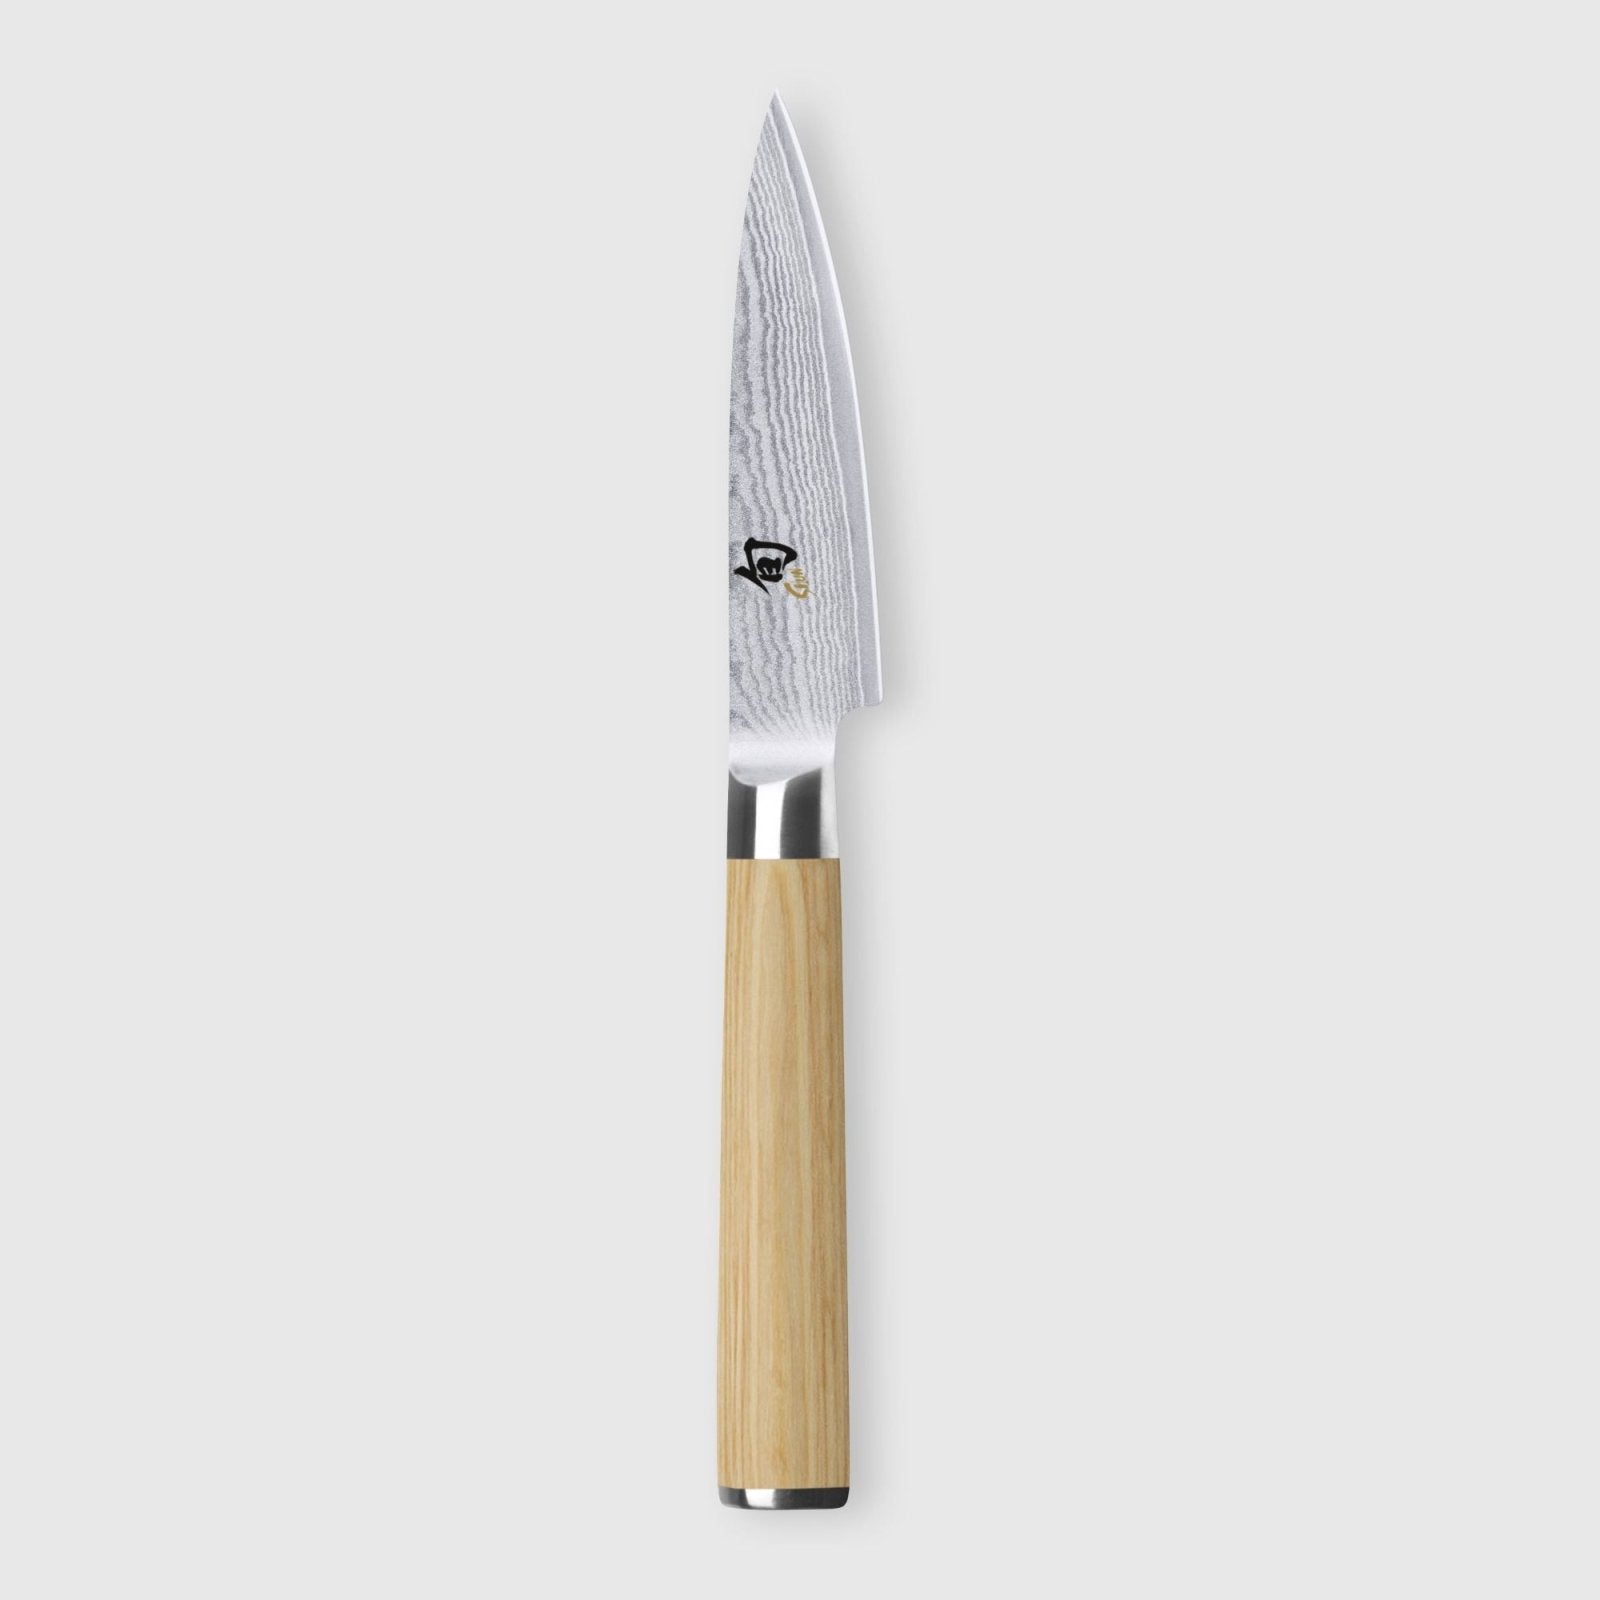 KAI Shun White 9cm Paring Knife - KAI-DM-0700W - The Cotswold Knife Company